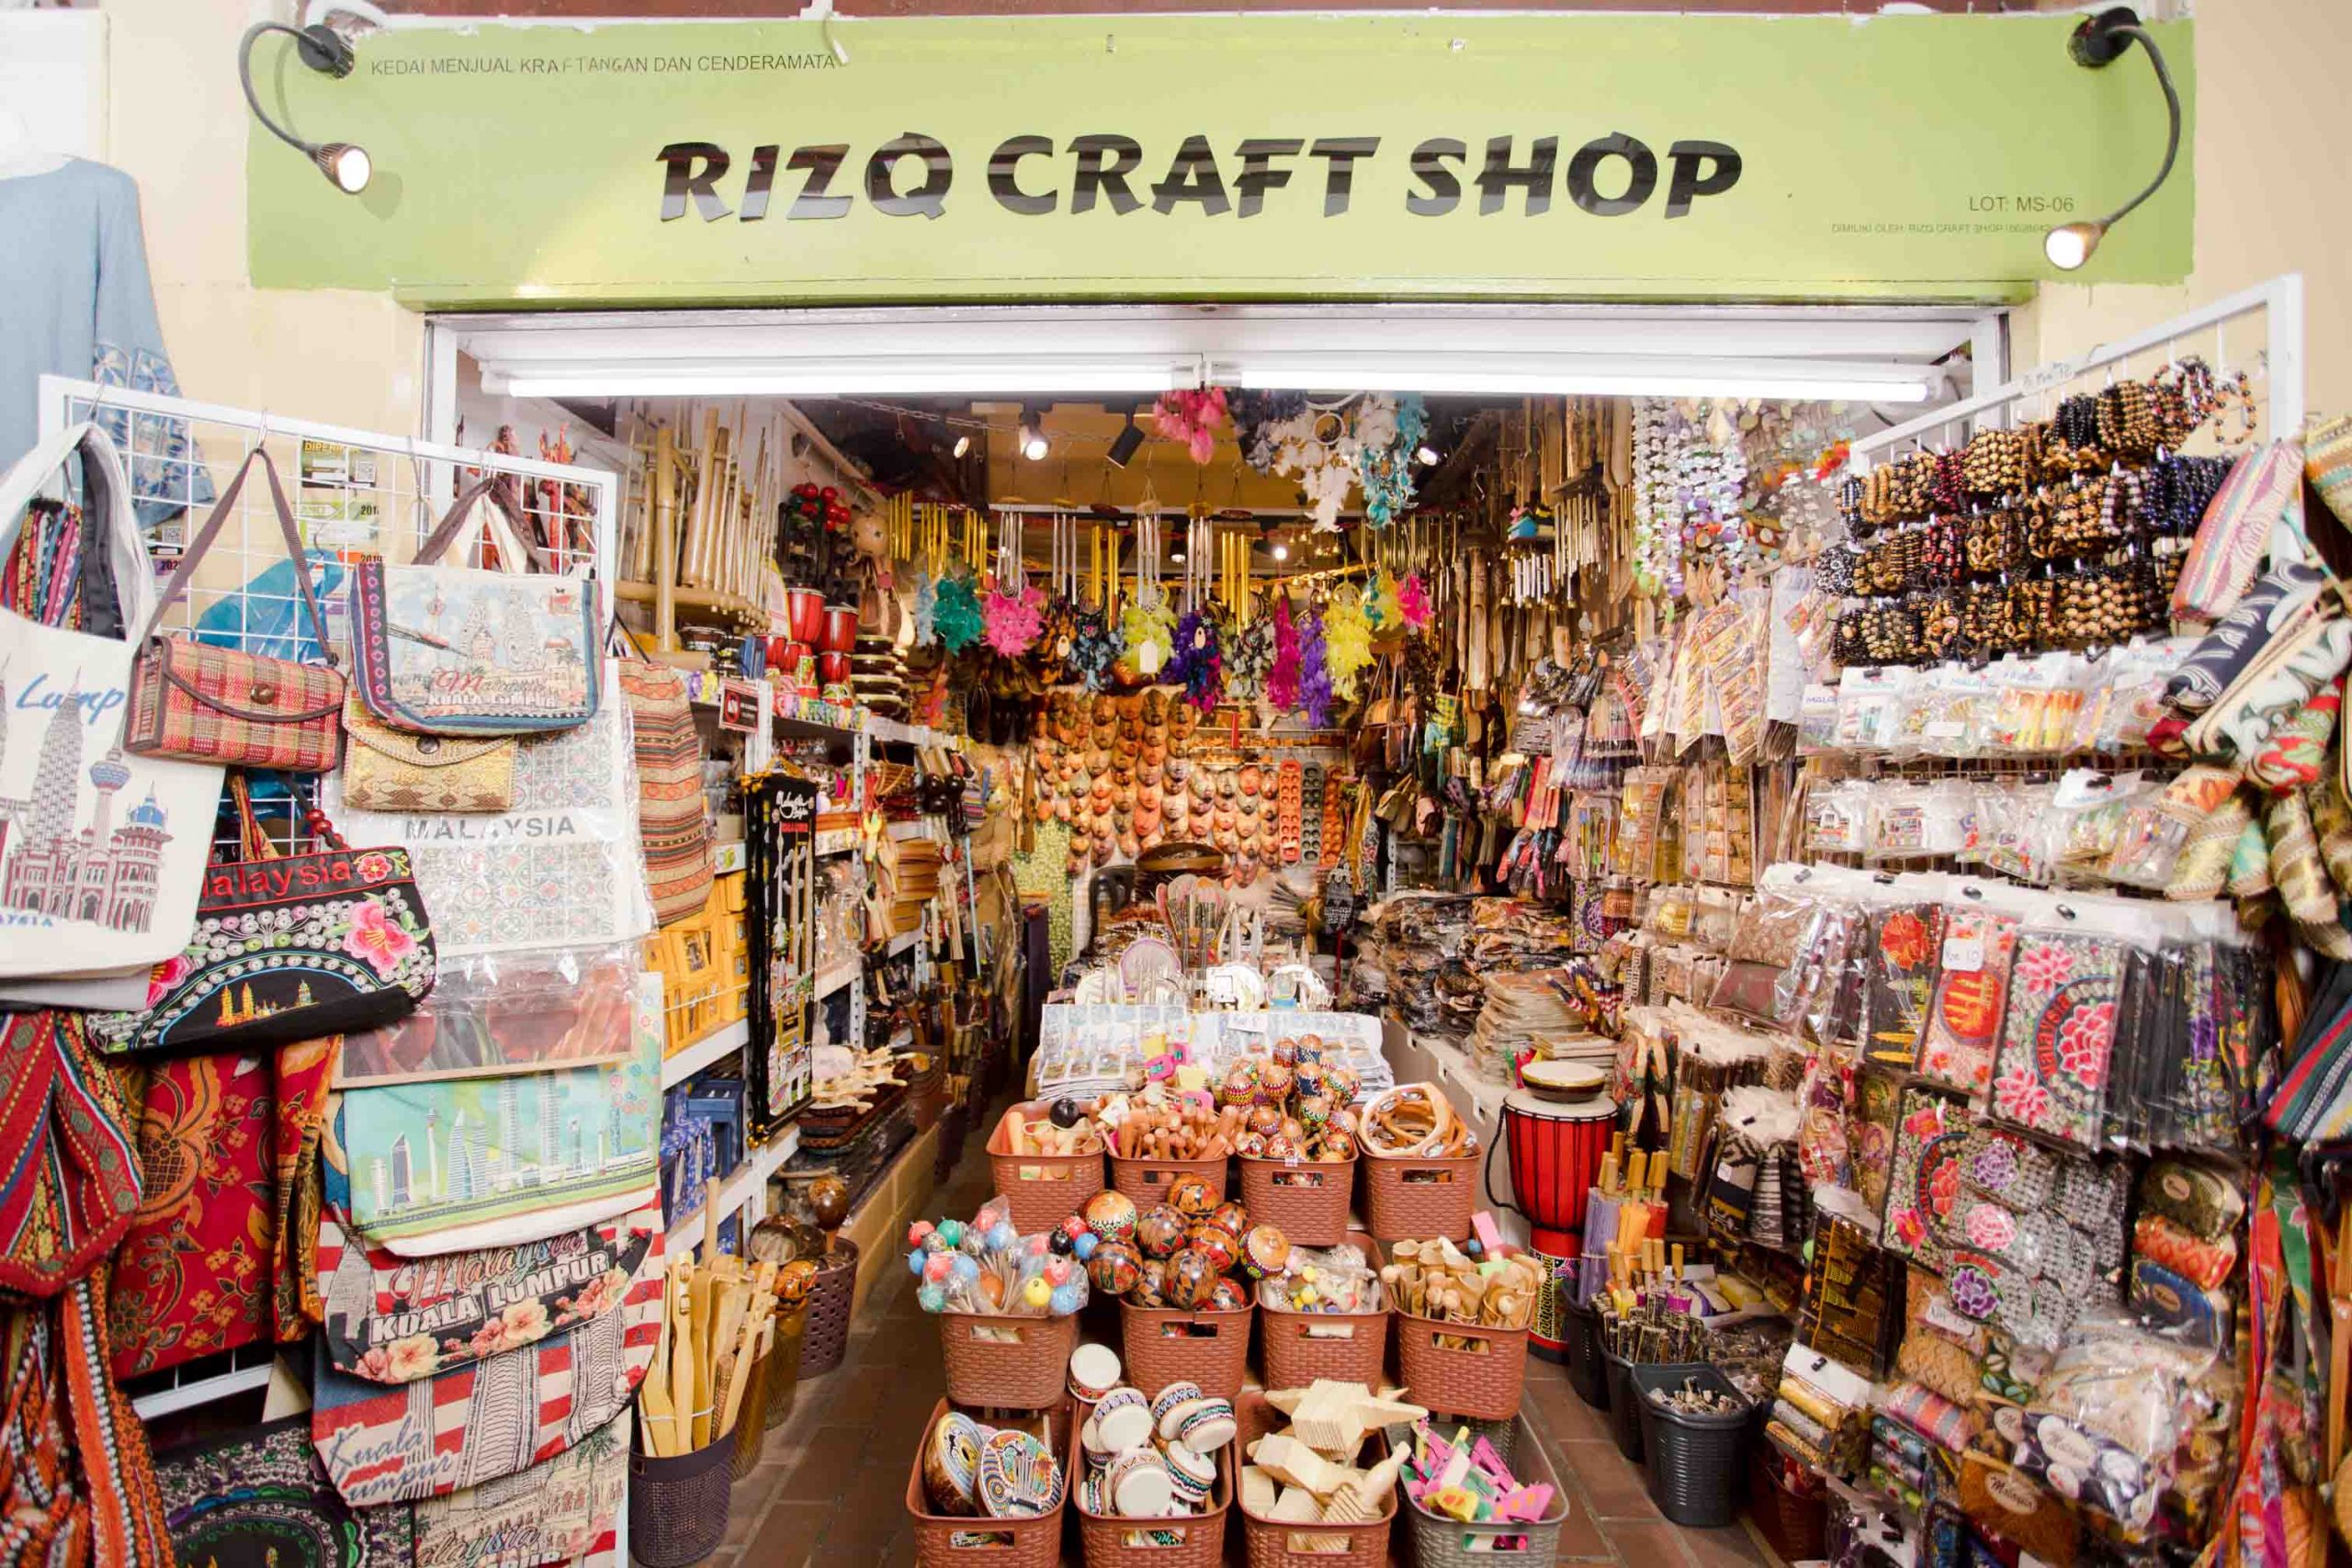 Rizq Craft Shop